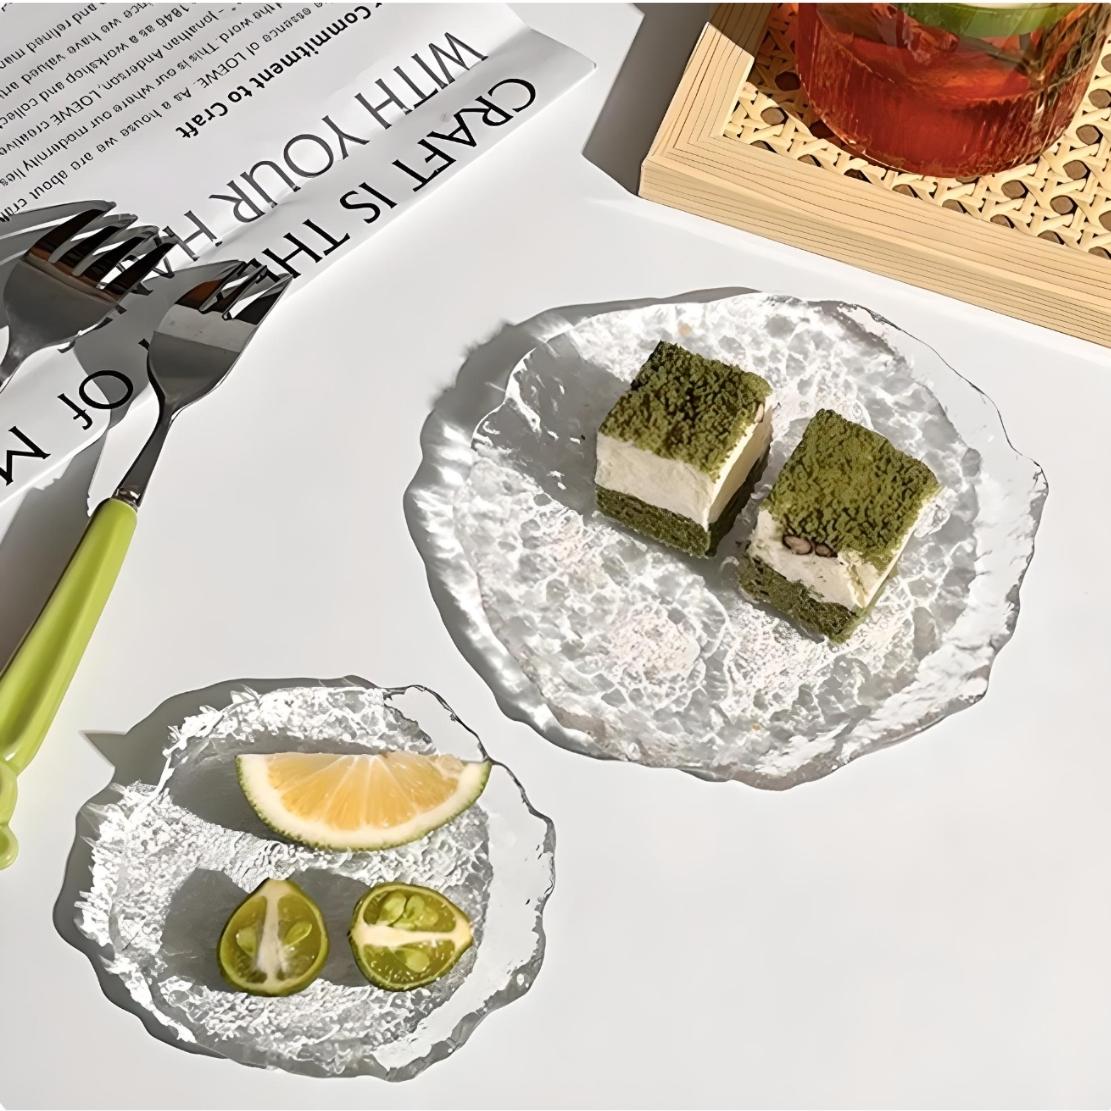 Irregular glass diningware plates